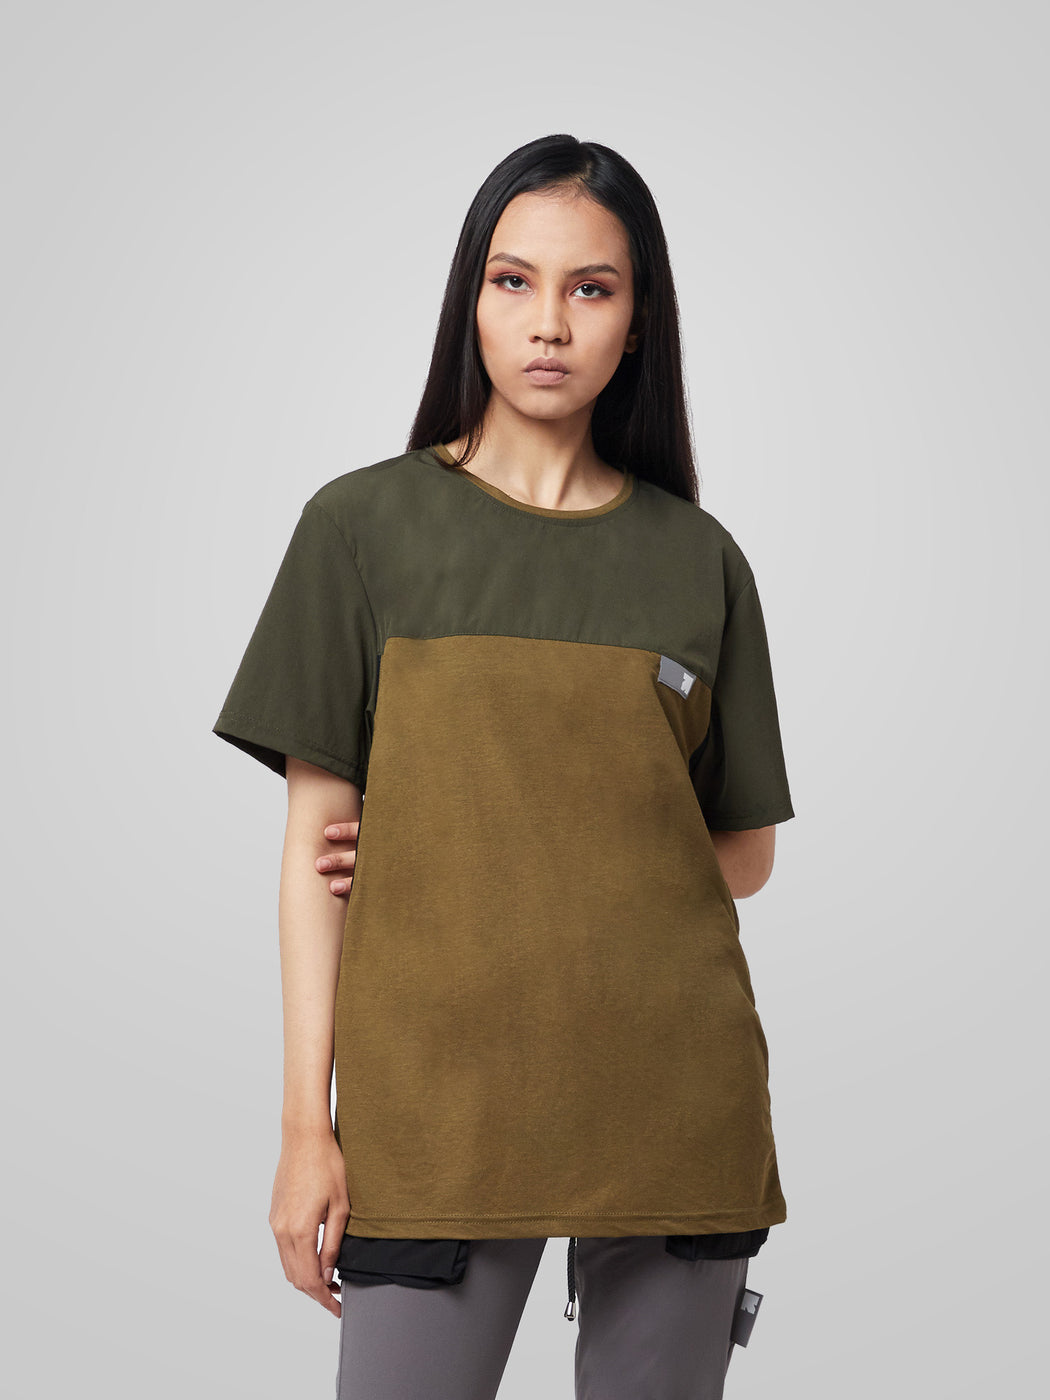 Unisex Ultimate Utilitarian Army Female T-shirt